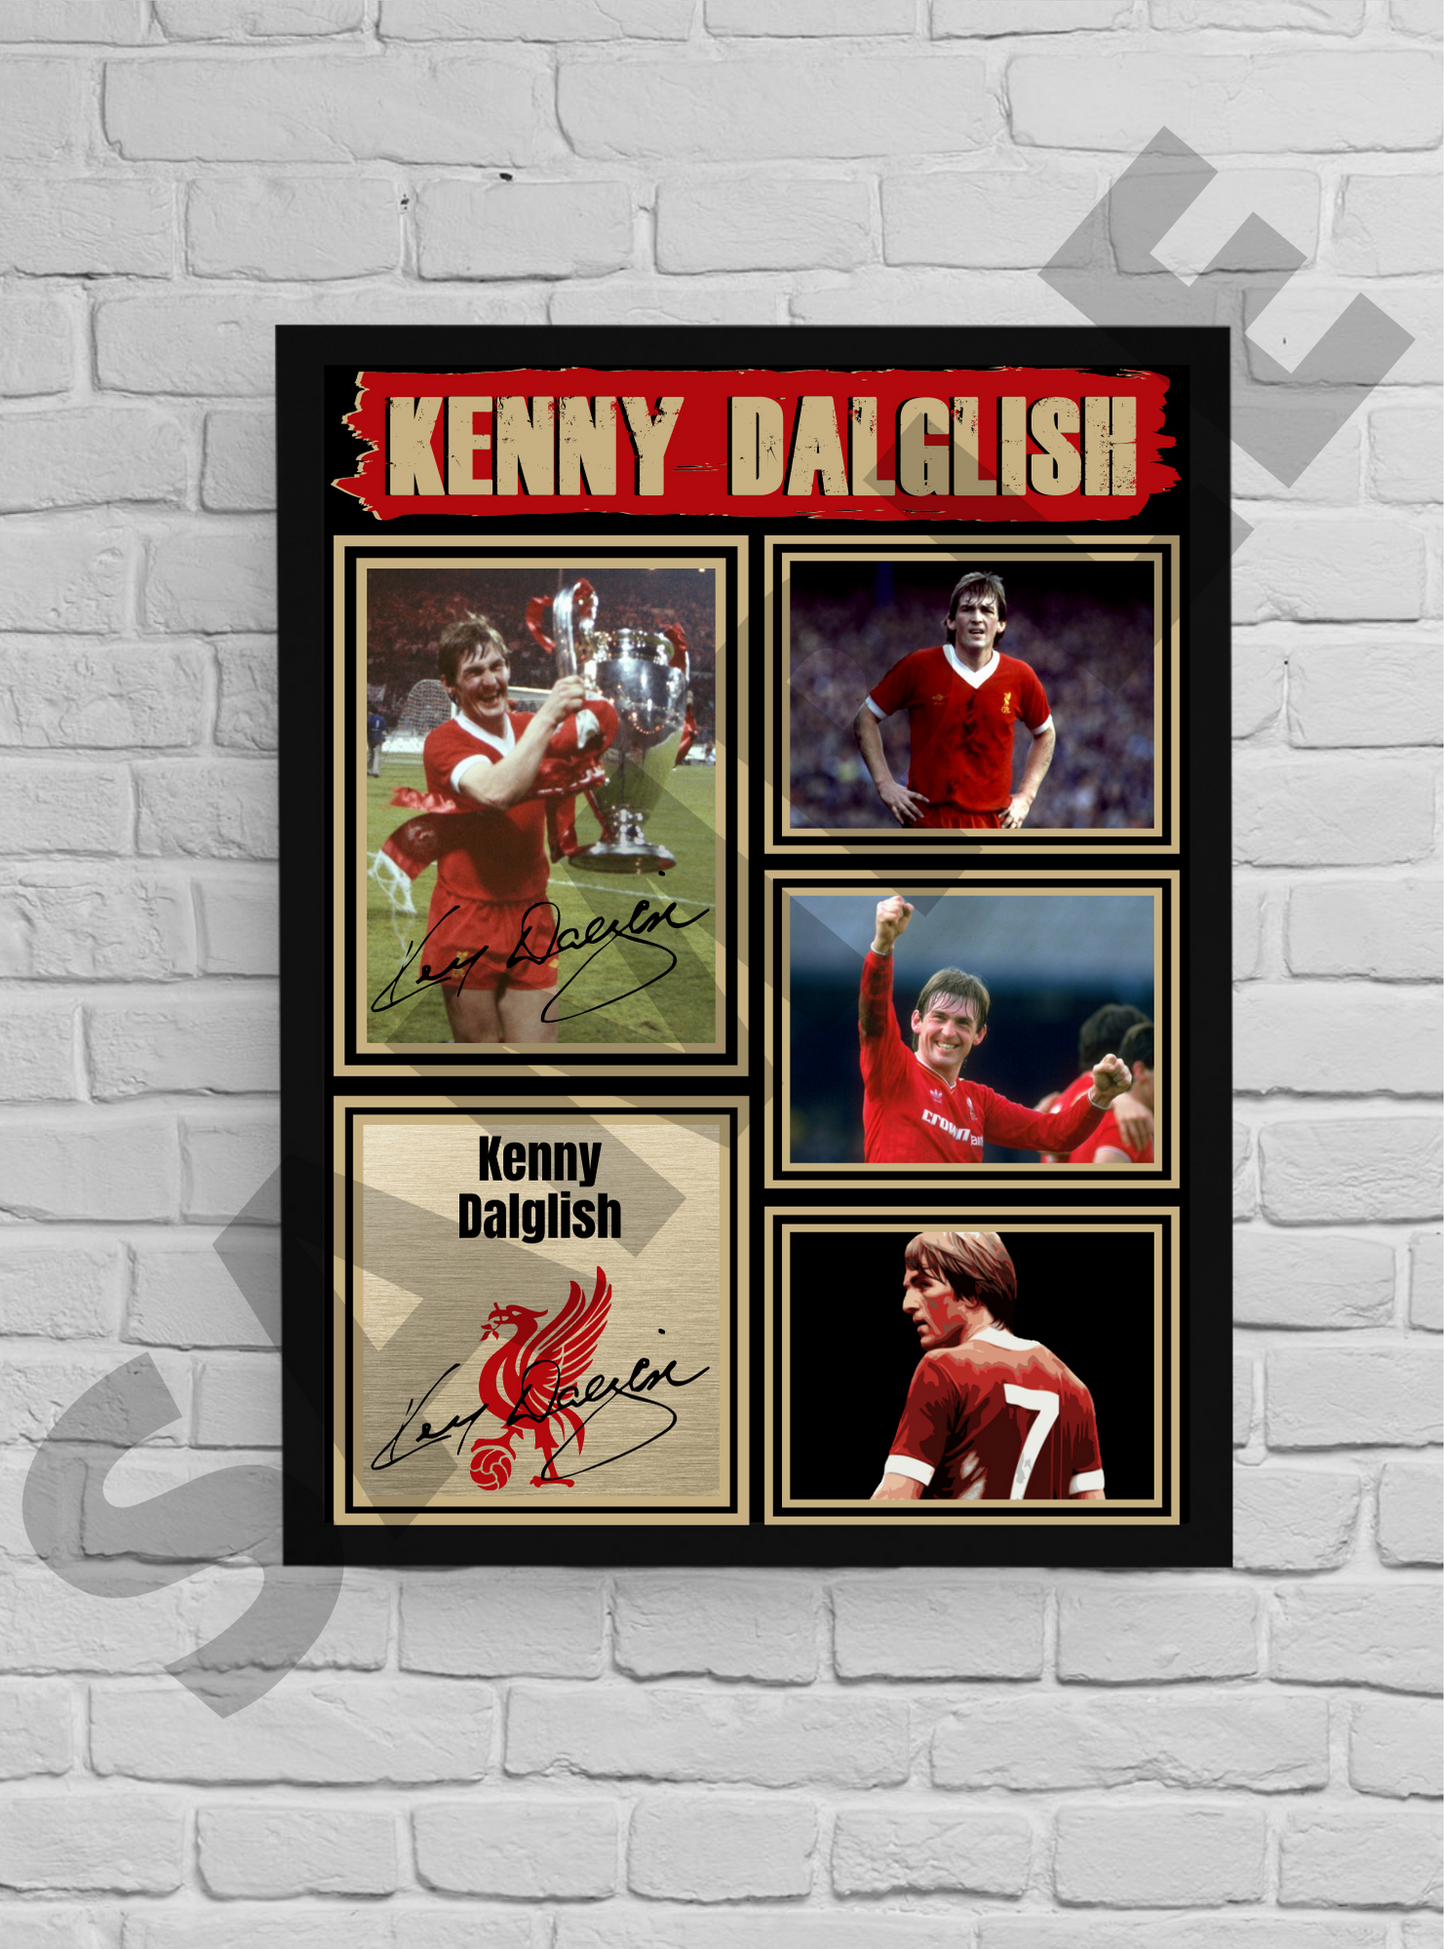 King Kenny Dalglish Liverpool Football memorabilia/collectable signed print